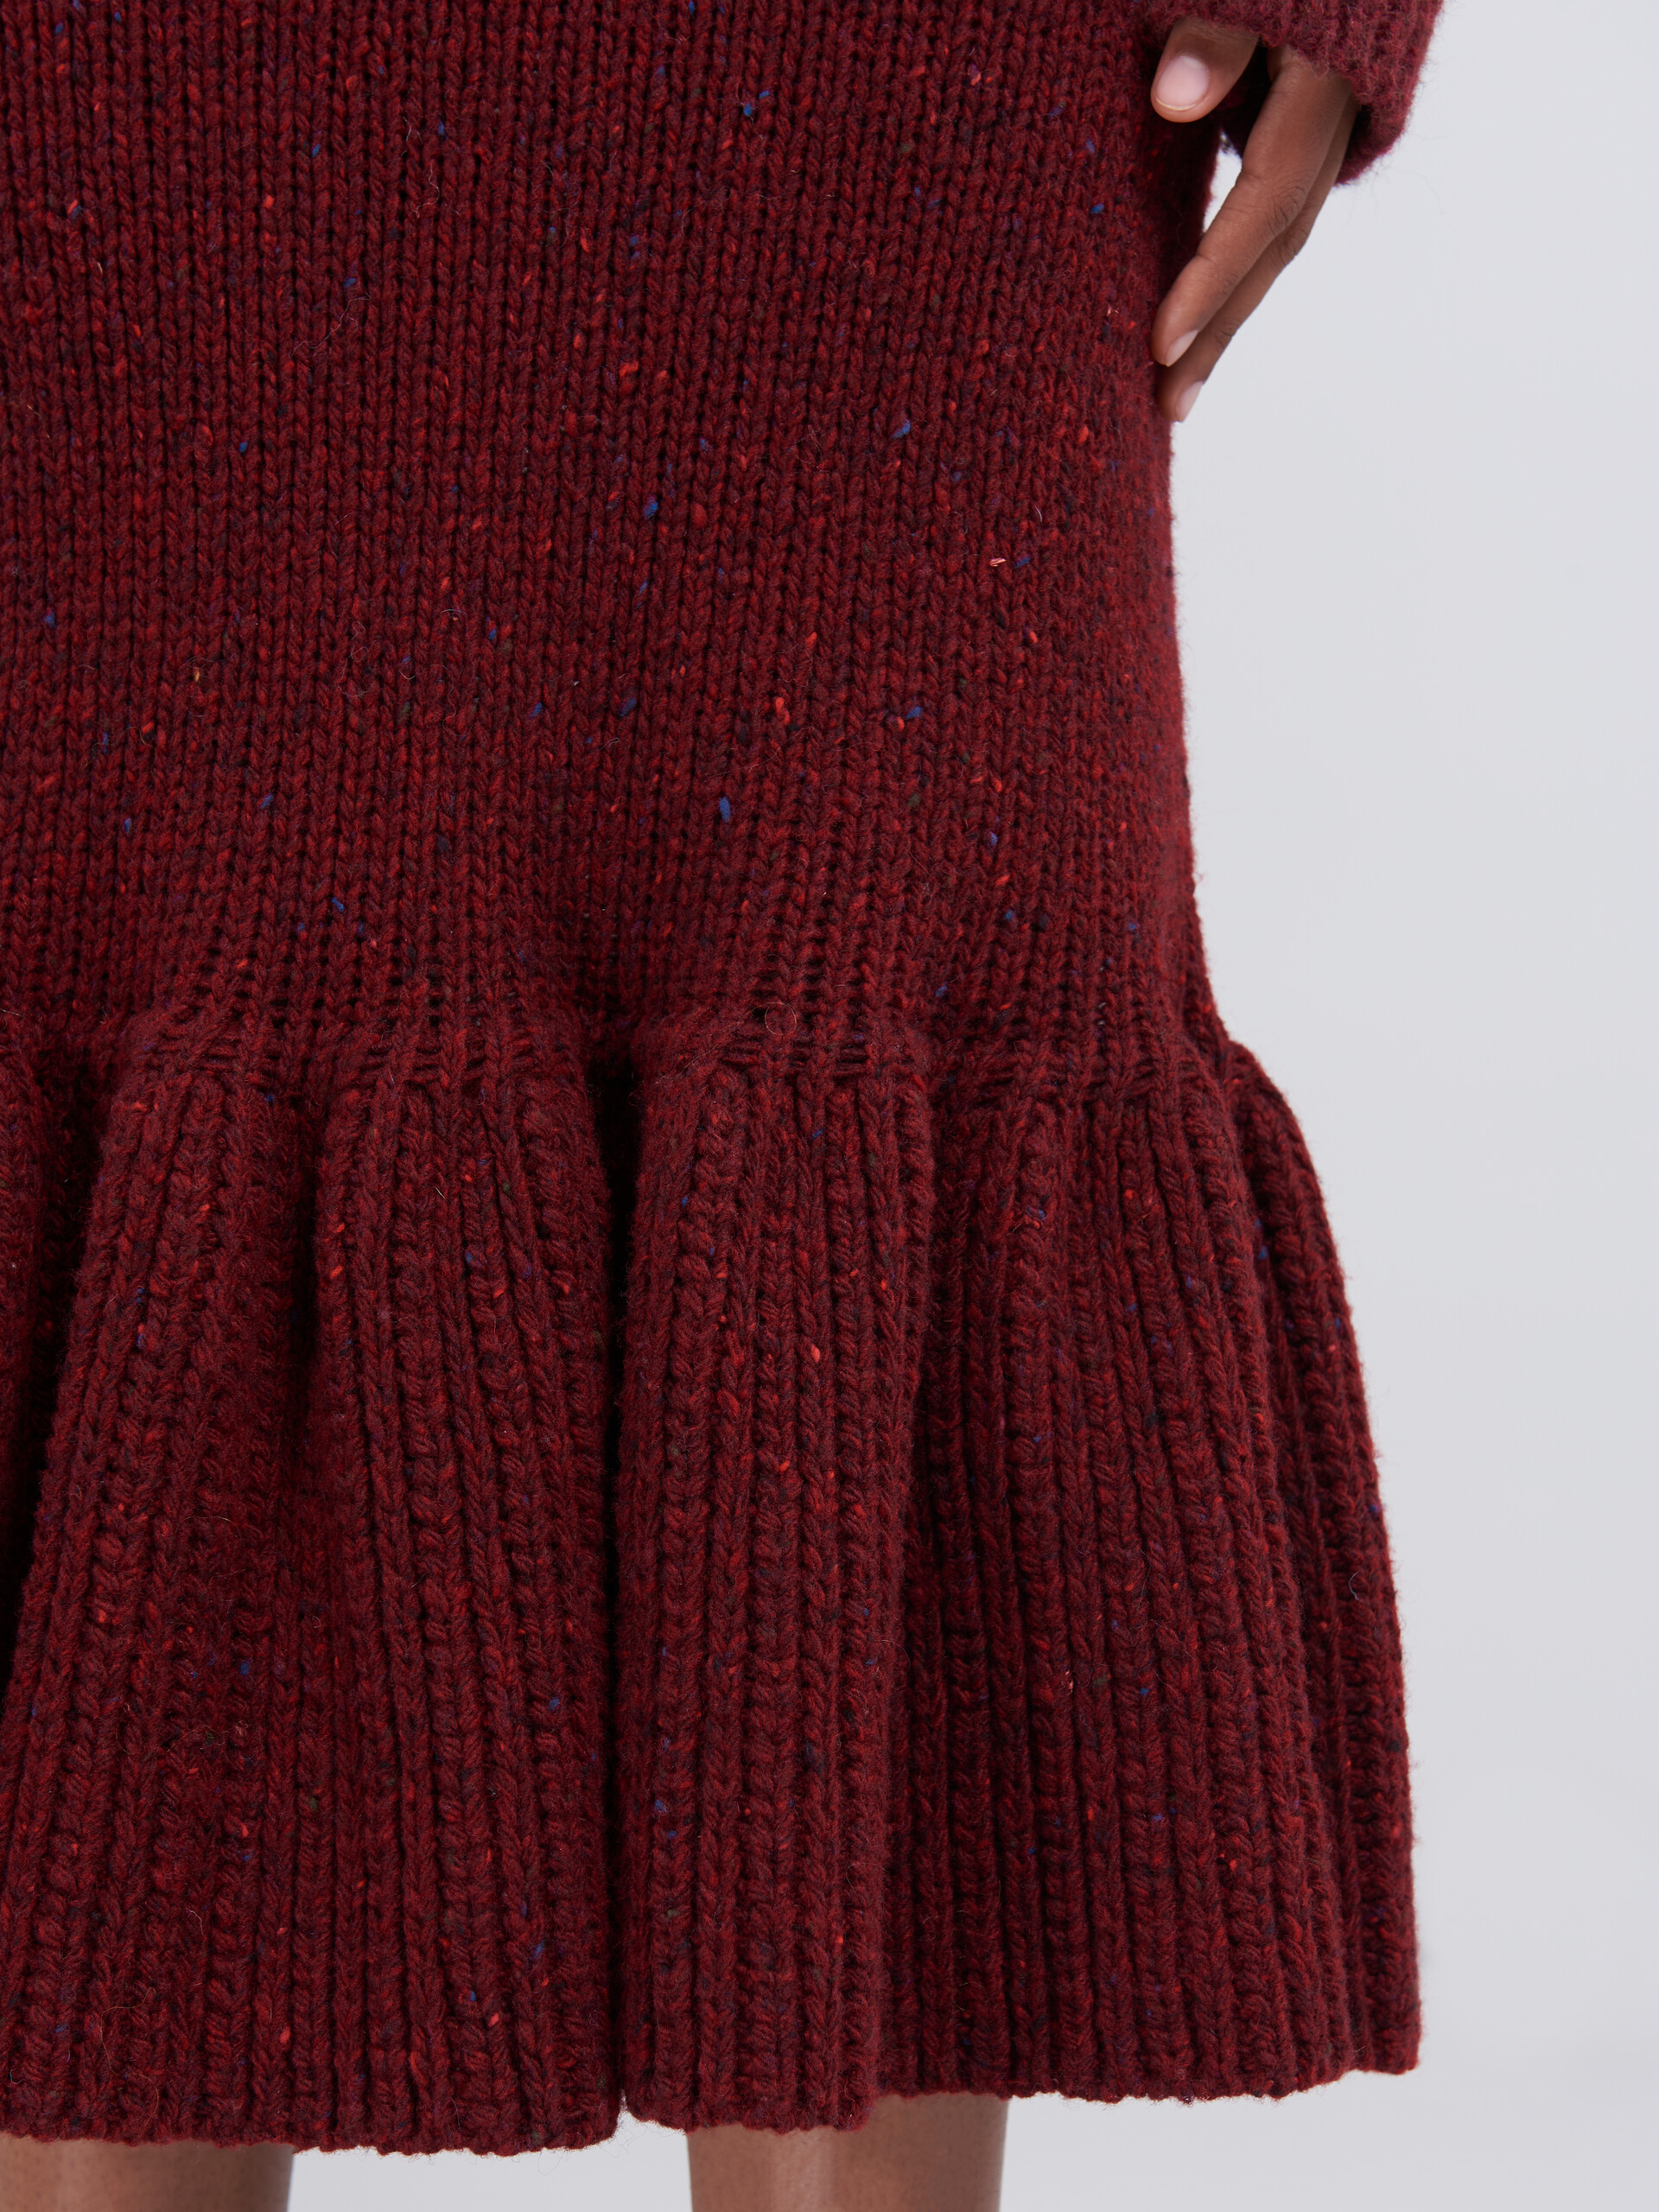 3D-stitch skirt in Shetland wool - Skirts - Image 4